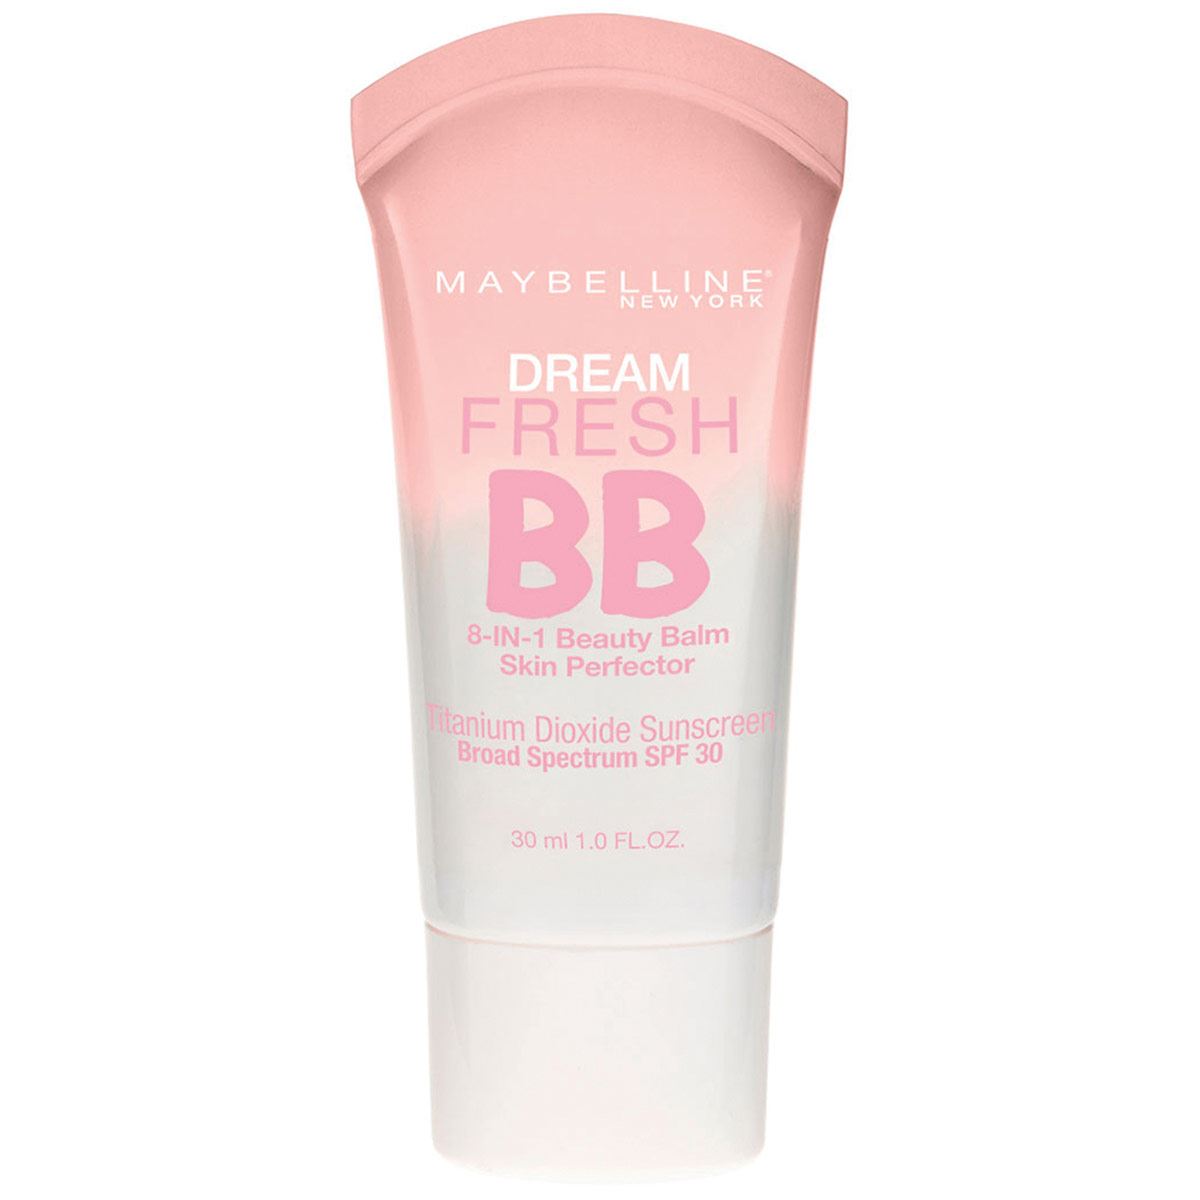 BB Cream Dream Fresh Maybelline Light Medium